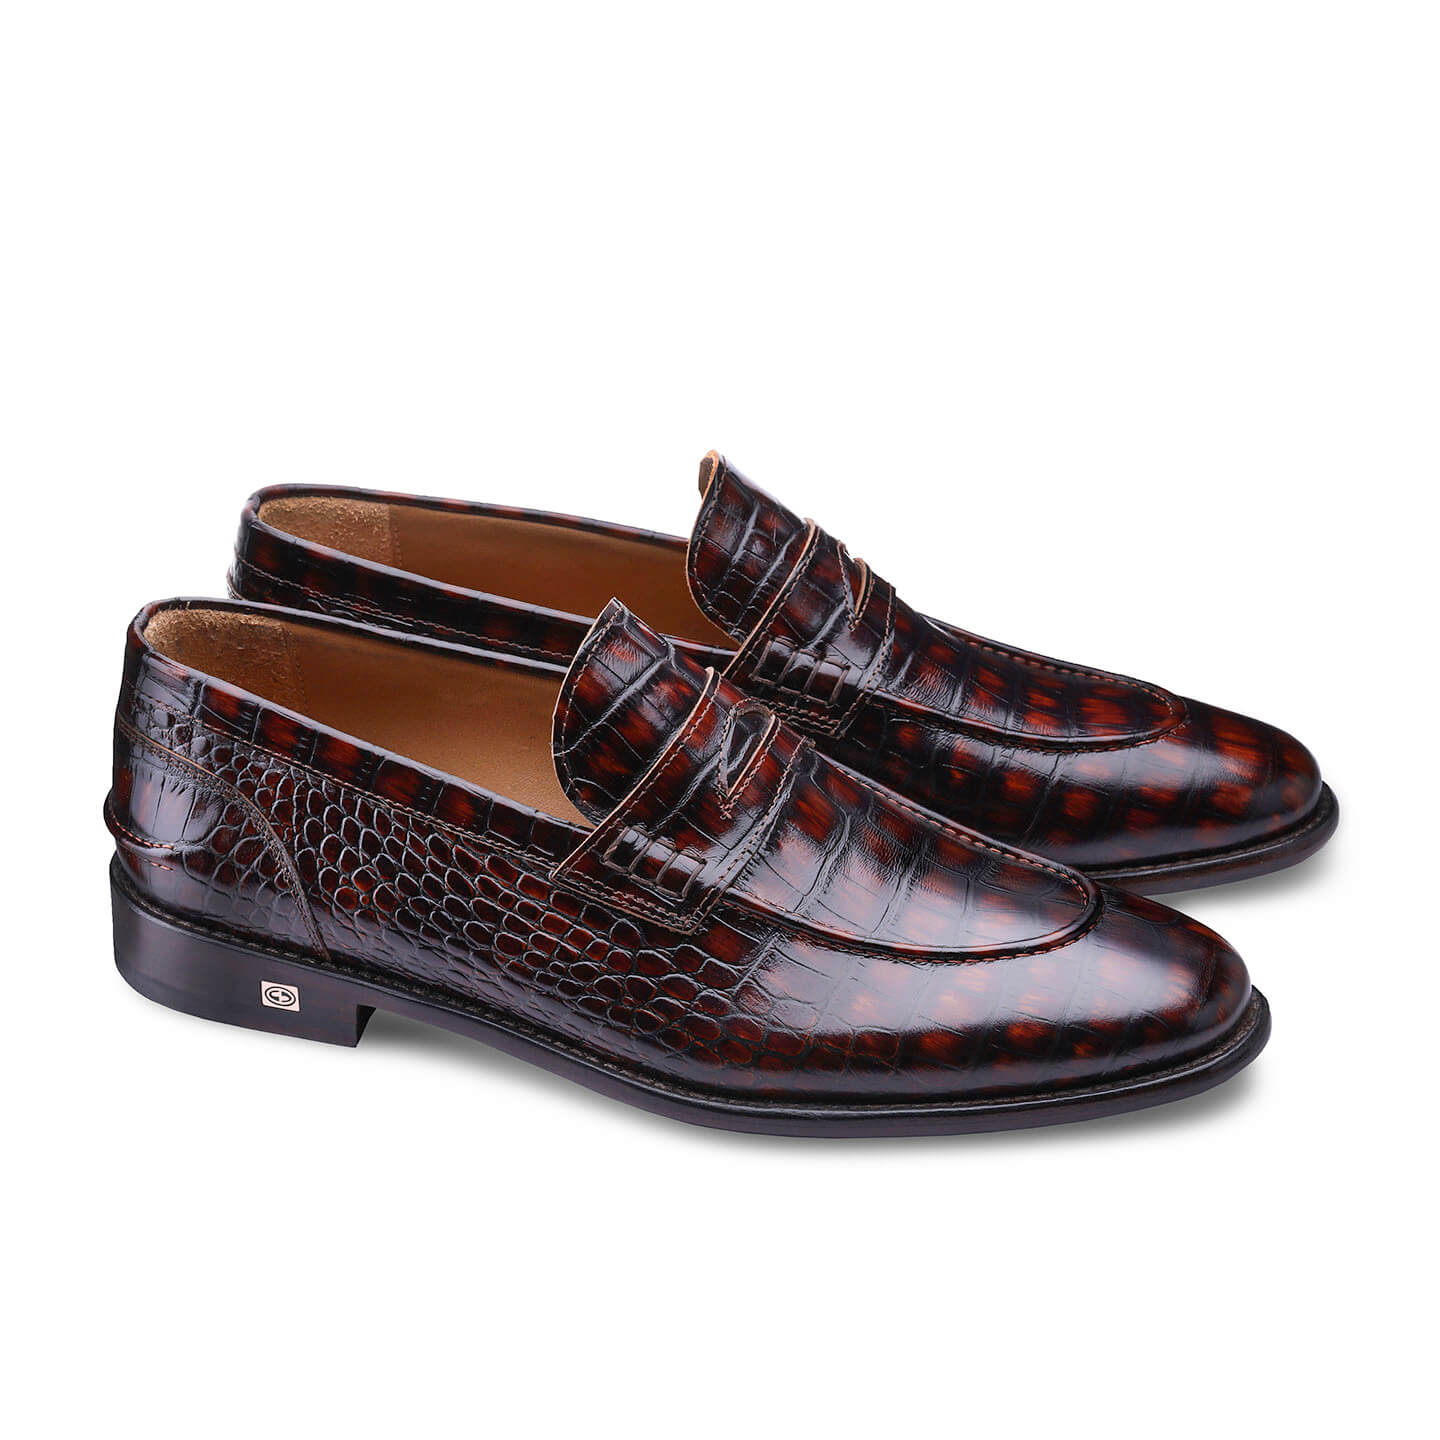 Elegant leather loafers